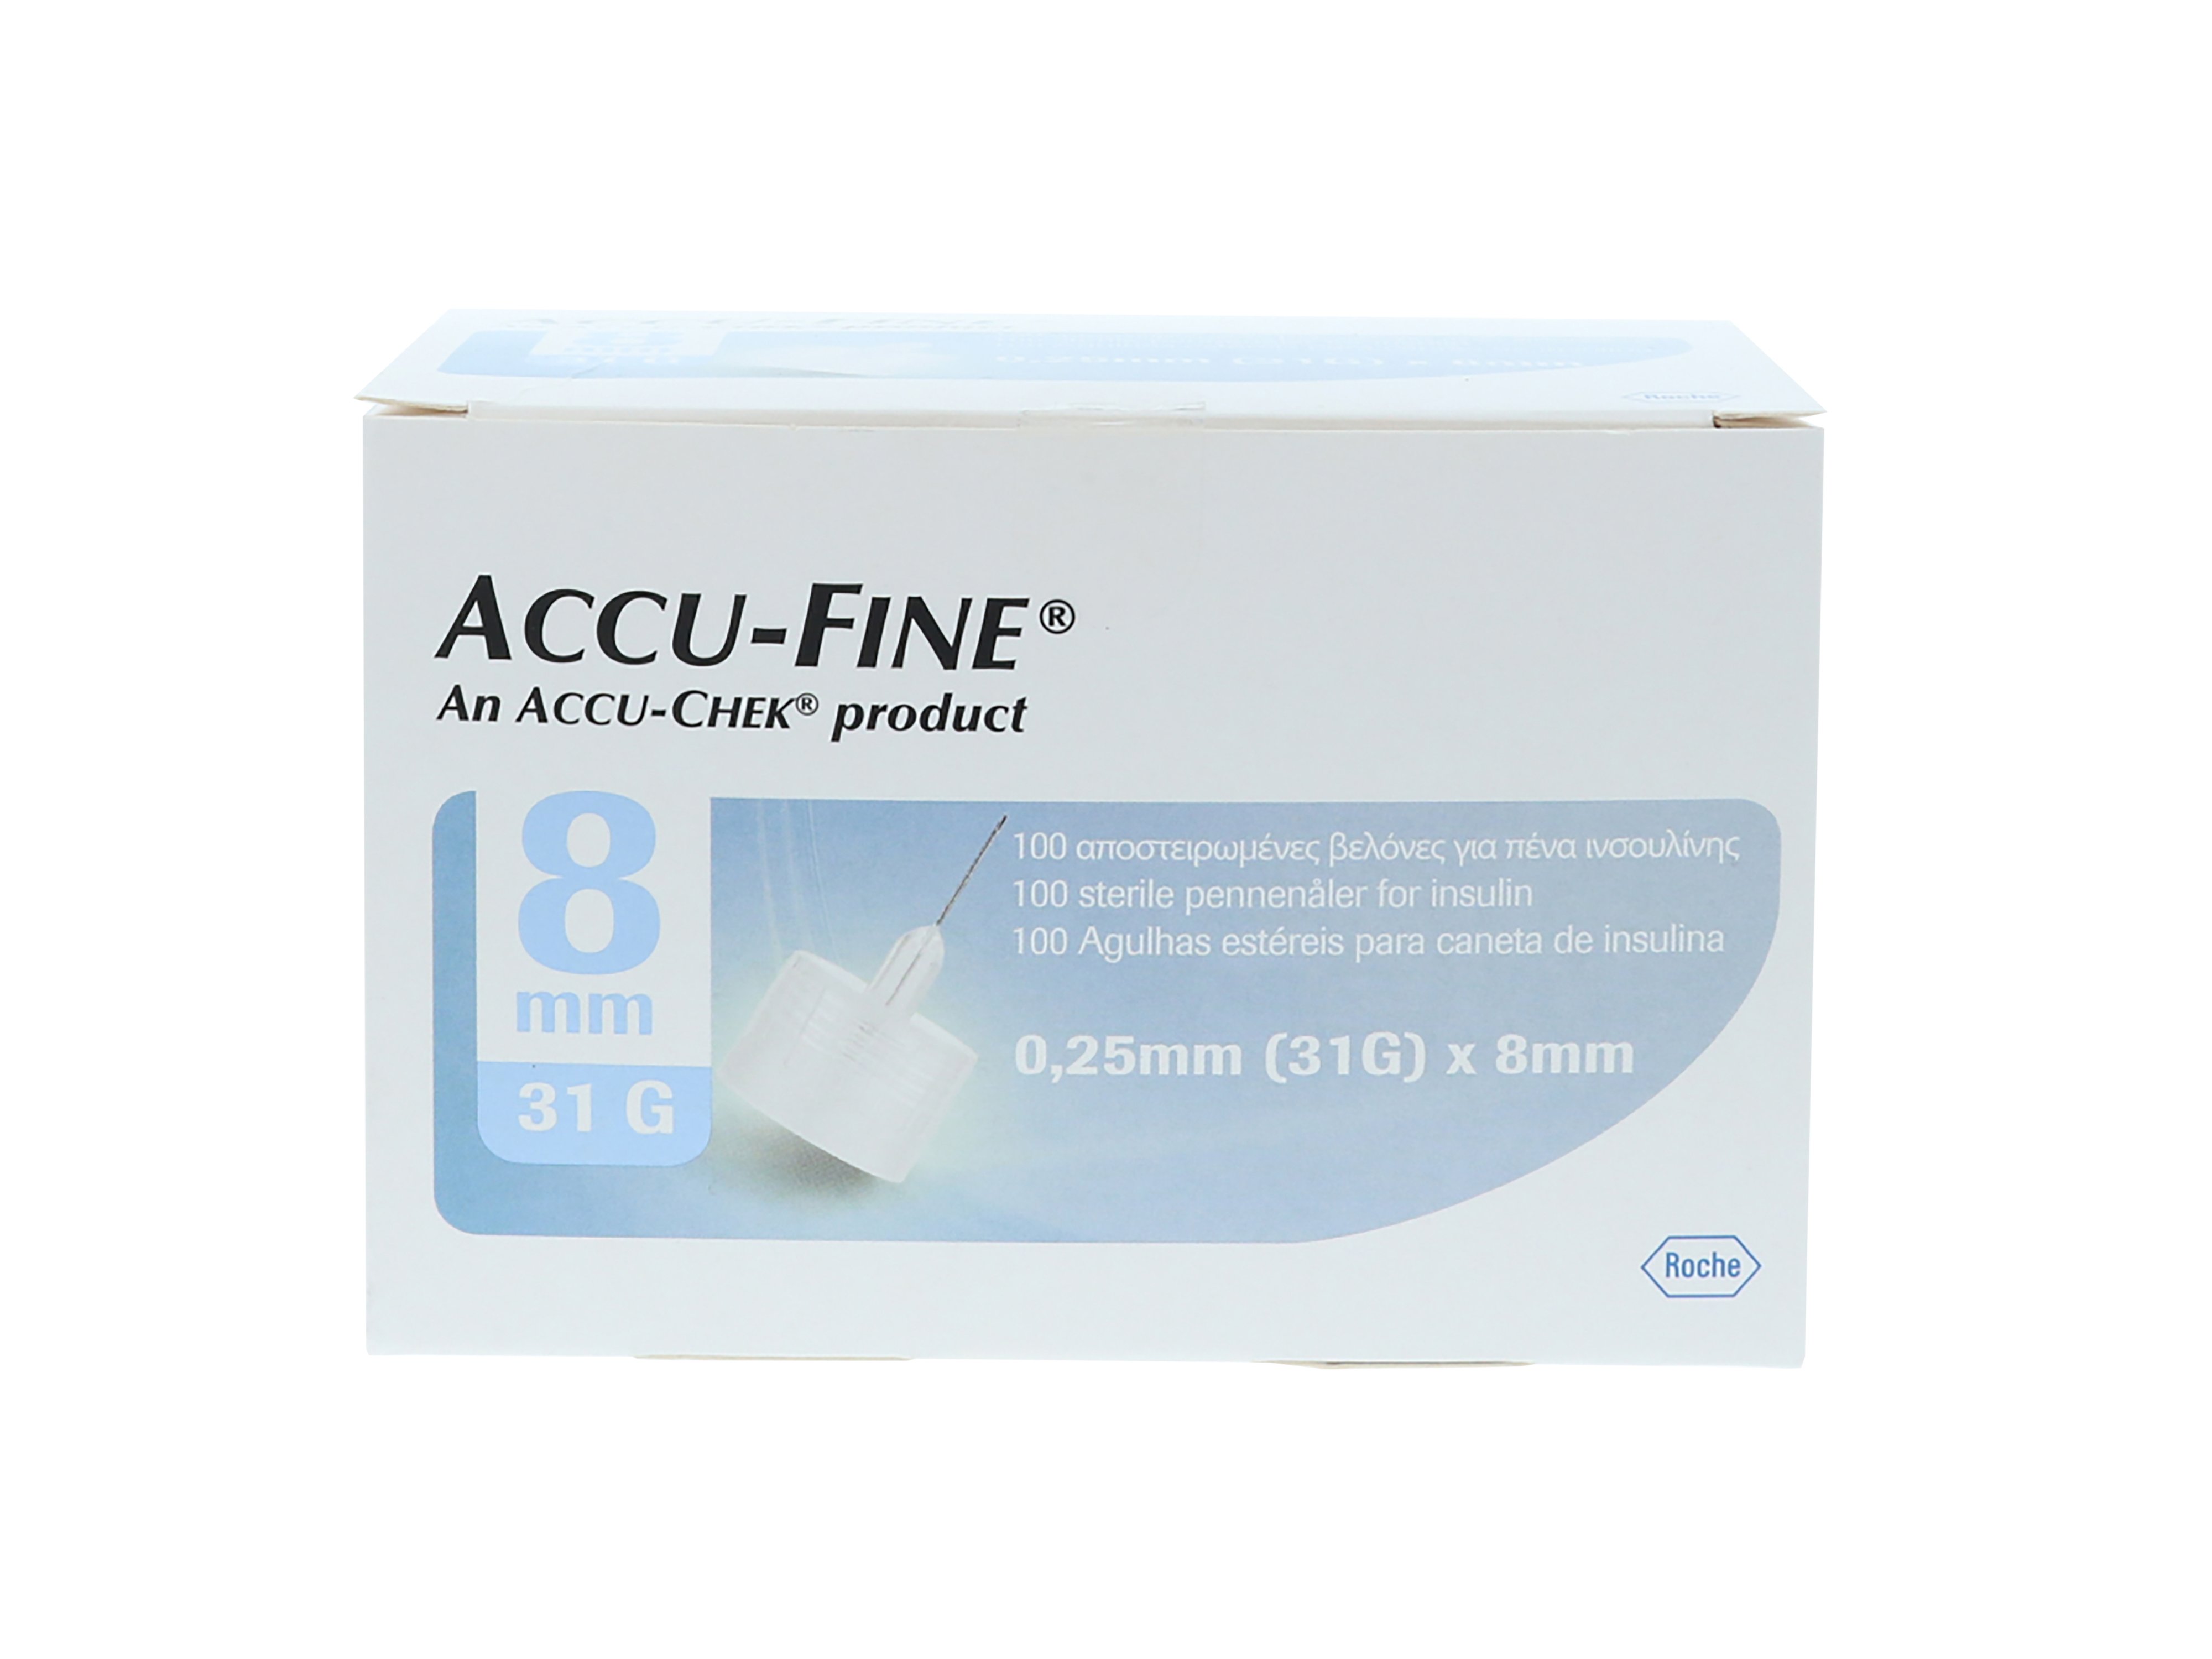 Accu-fine Pennekanyler til insulinpenner, 31G 8mm (0,25mm x 8mm), 100 stk